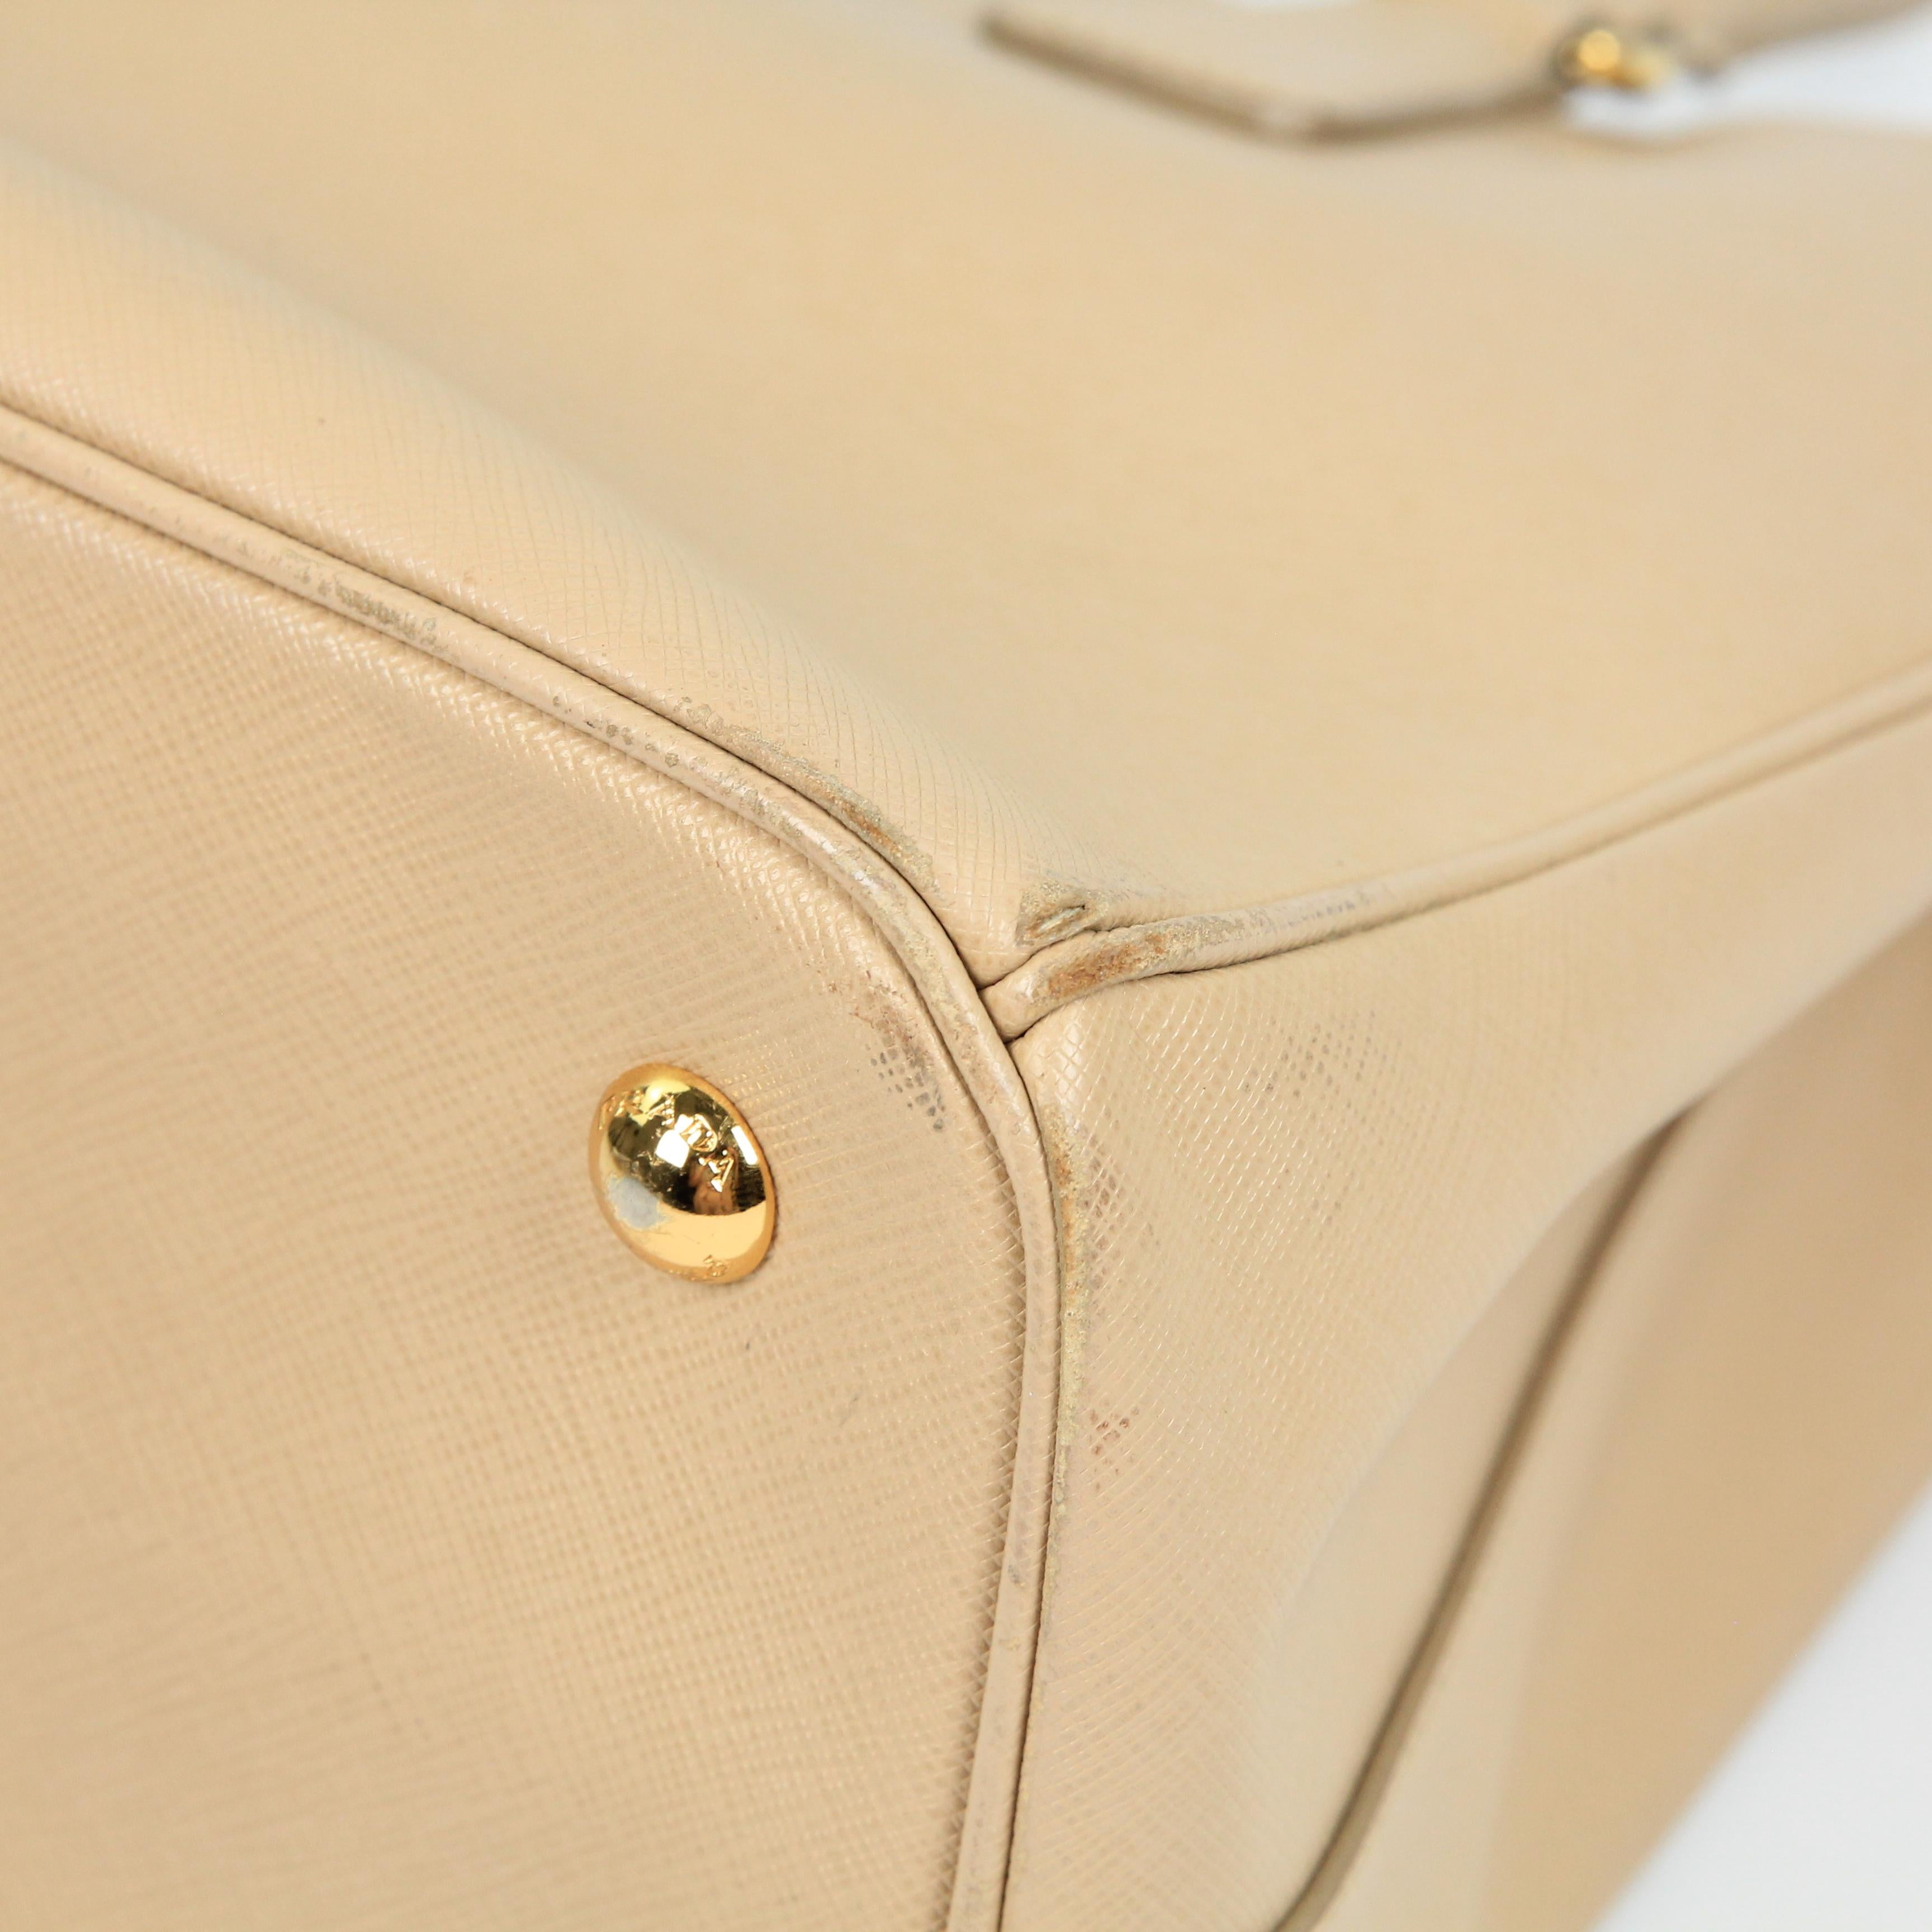 Prada Double leather handbag In Good Condition For Sale In Rīga, LV